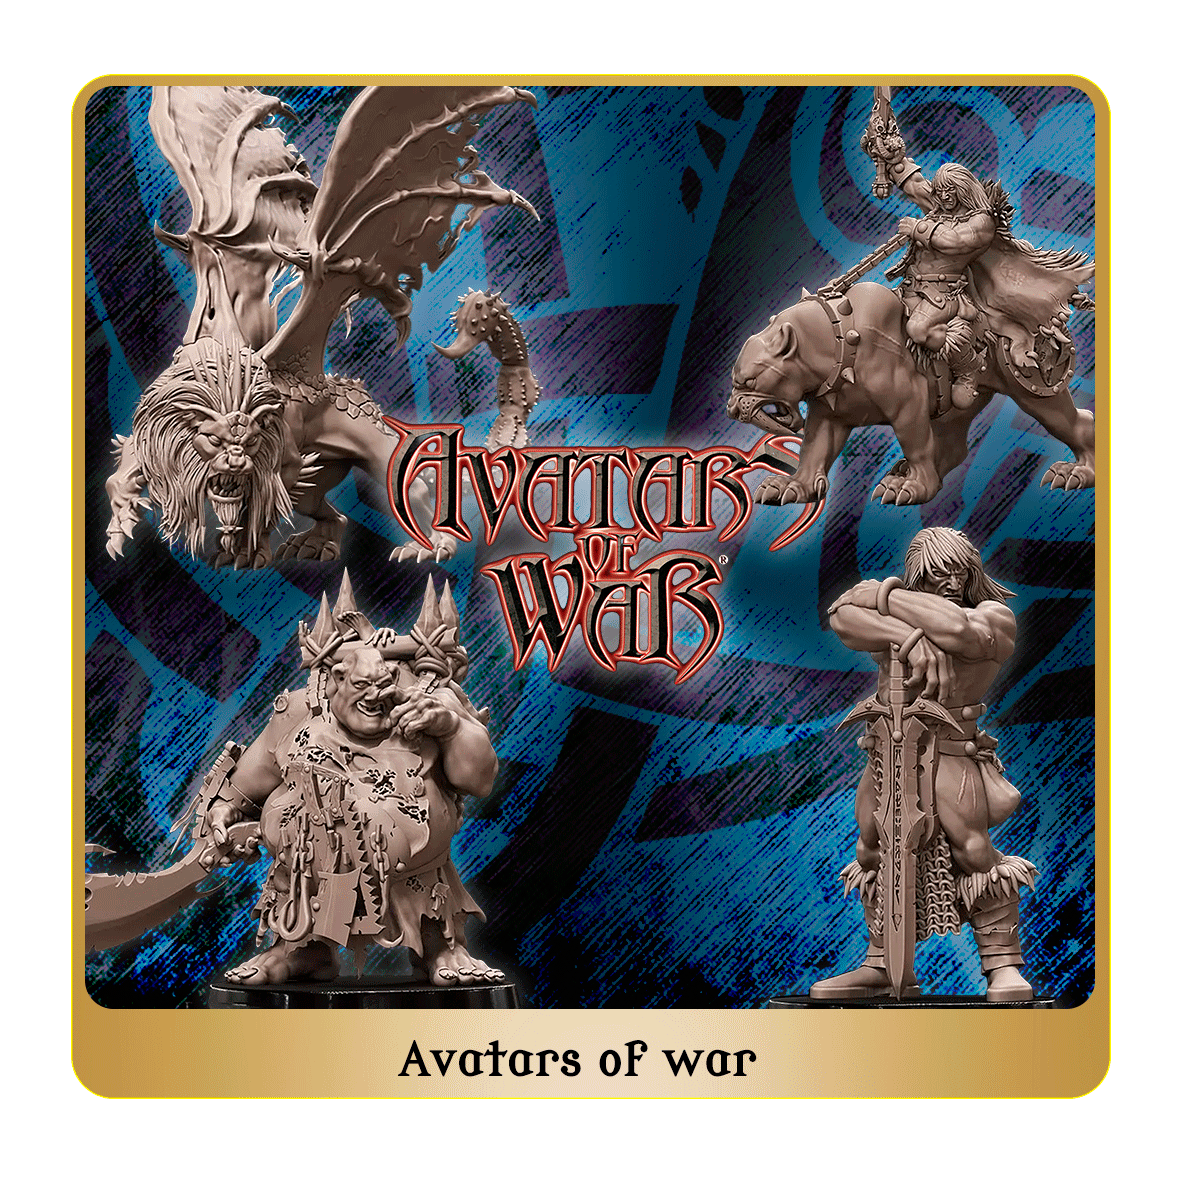 Avatars of war